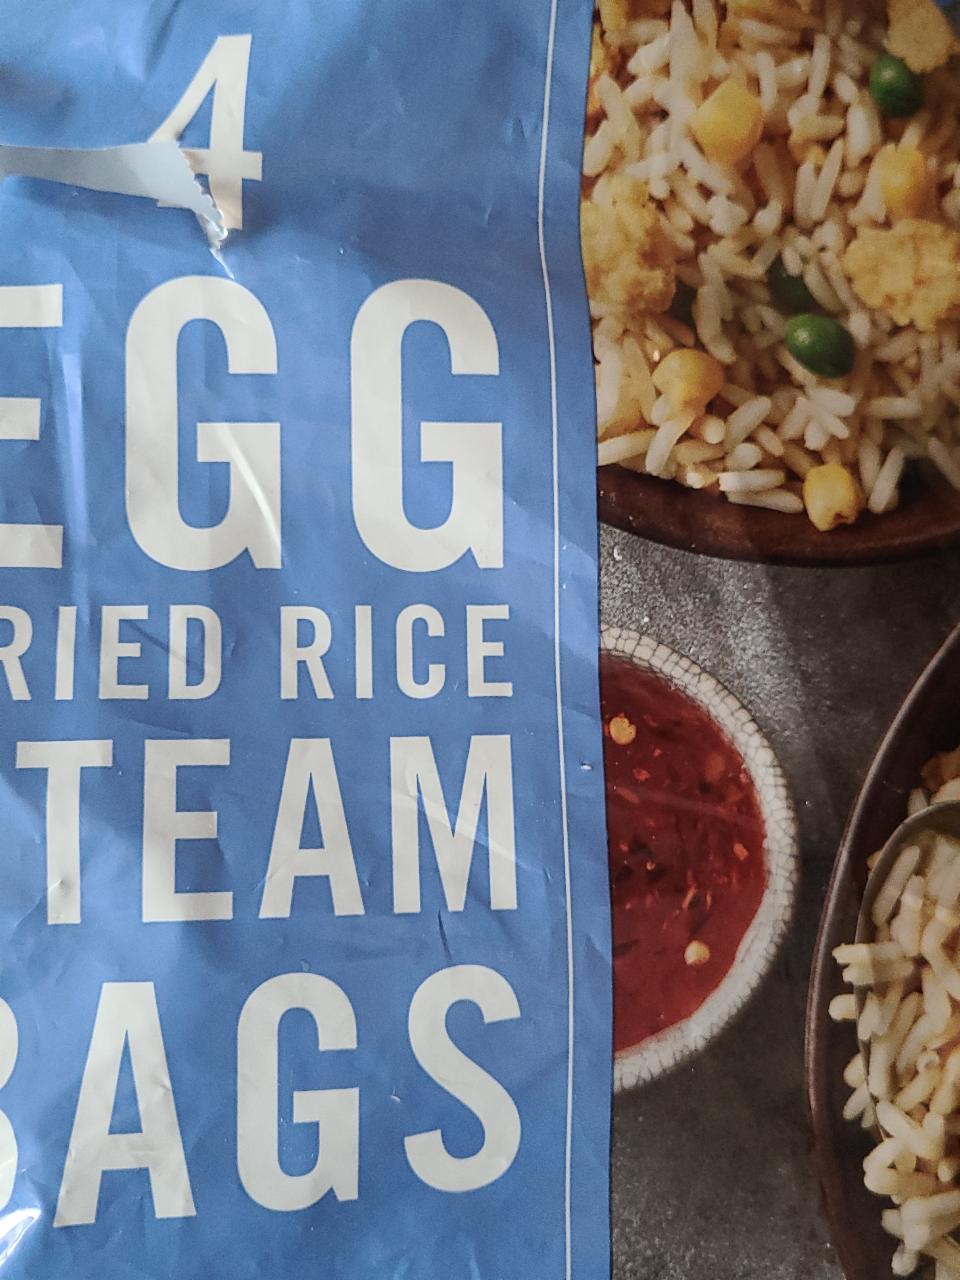 Fotografie - 4 Egg Fried Rice Steam Bags Iceland